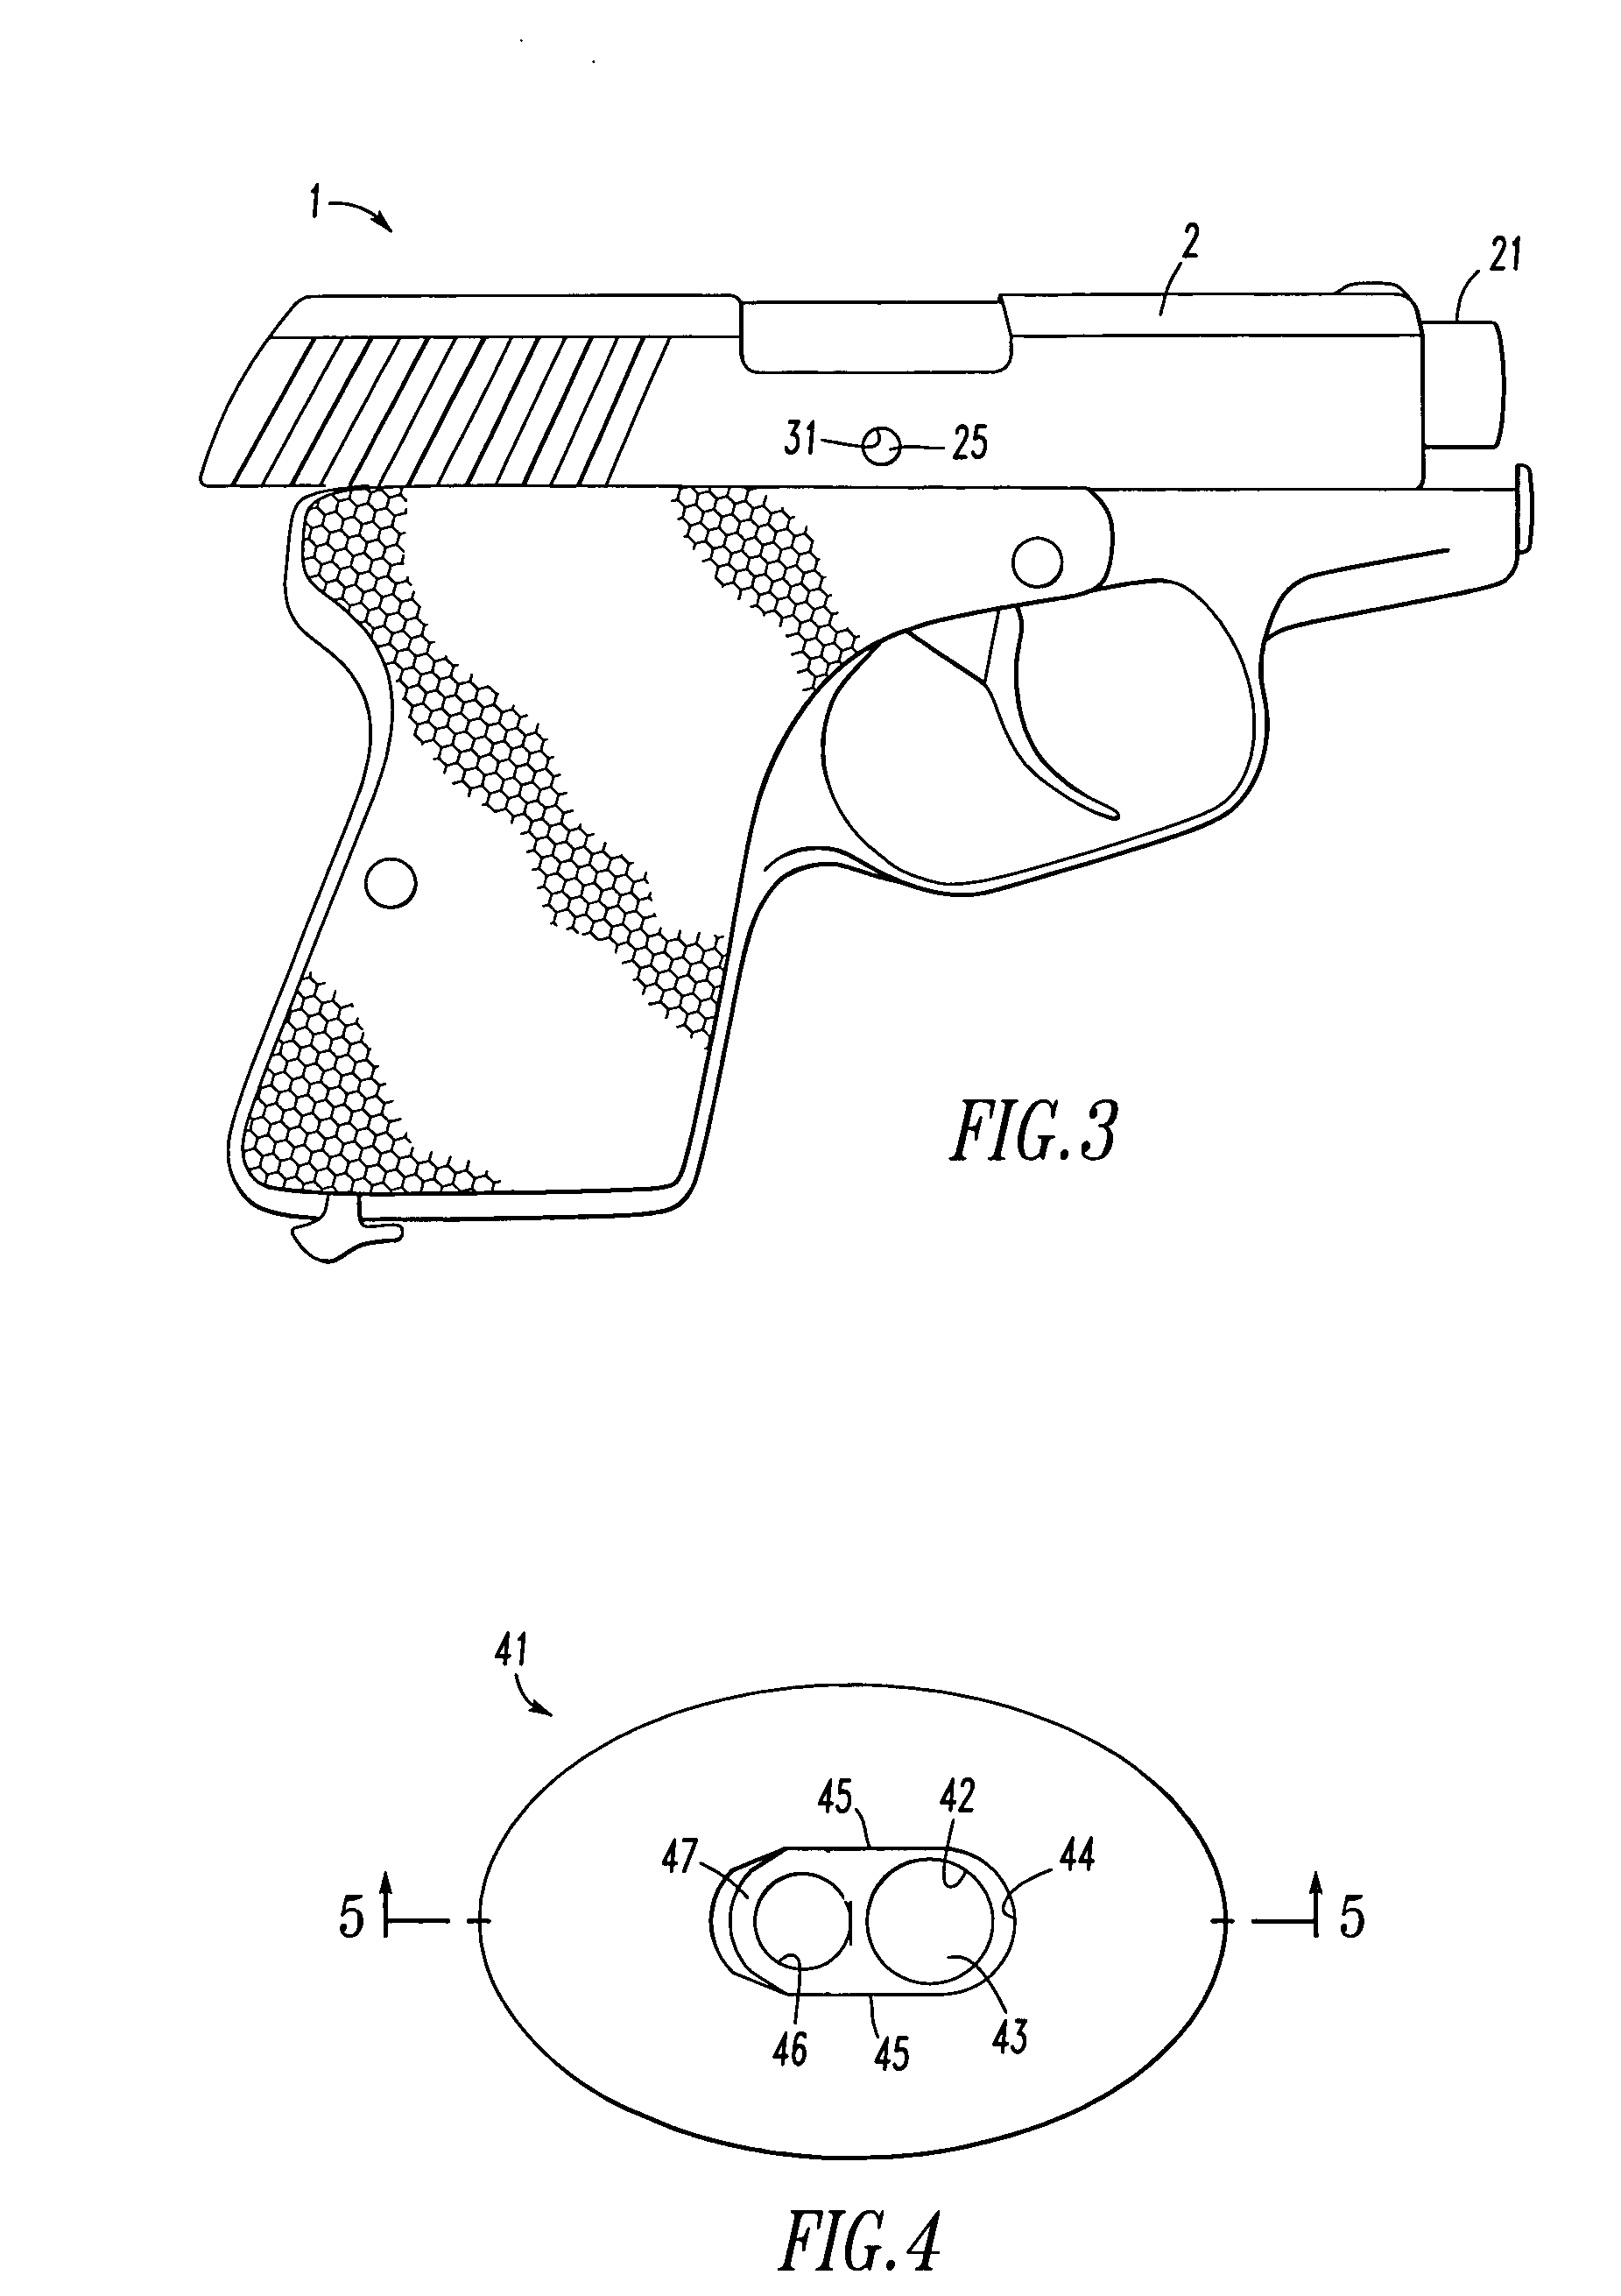 Handgun disassembly device